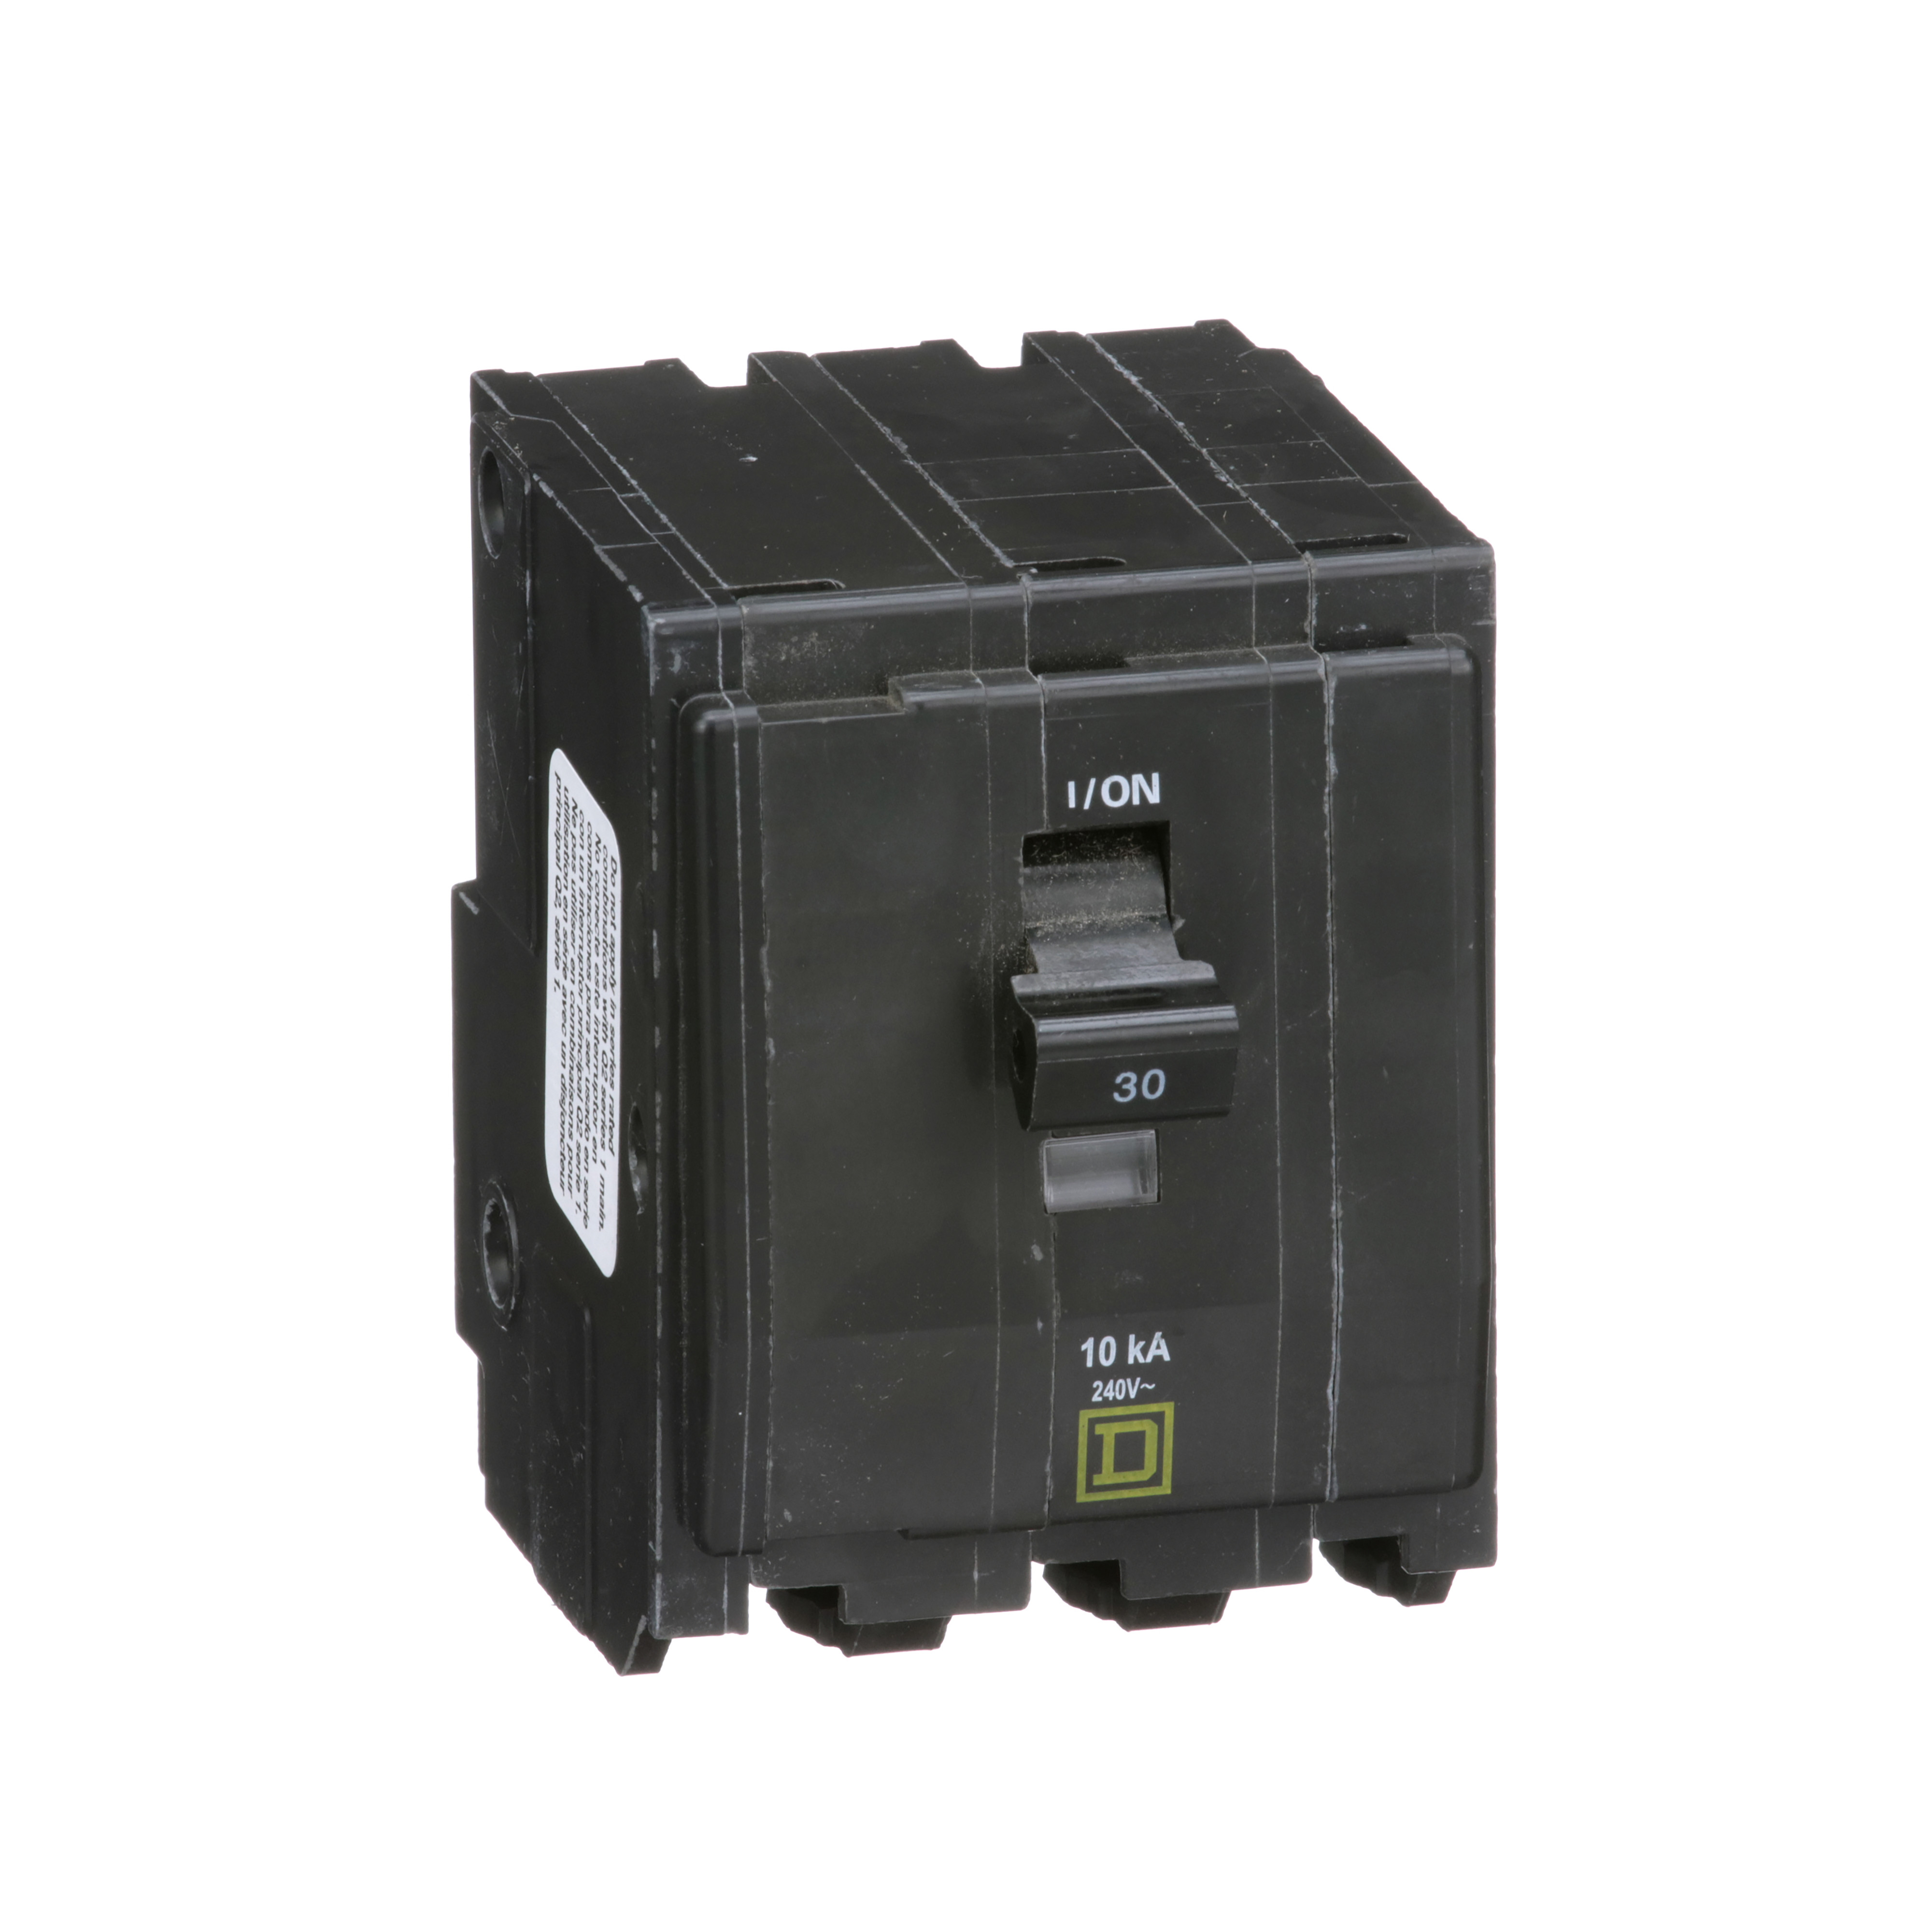 Mini circuit breaker, QO, 30A, 3 pole, 120/240VAC, 10kA, plug in